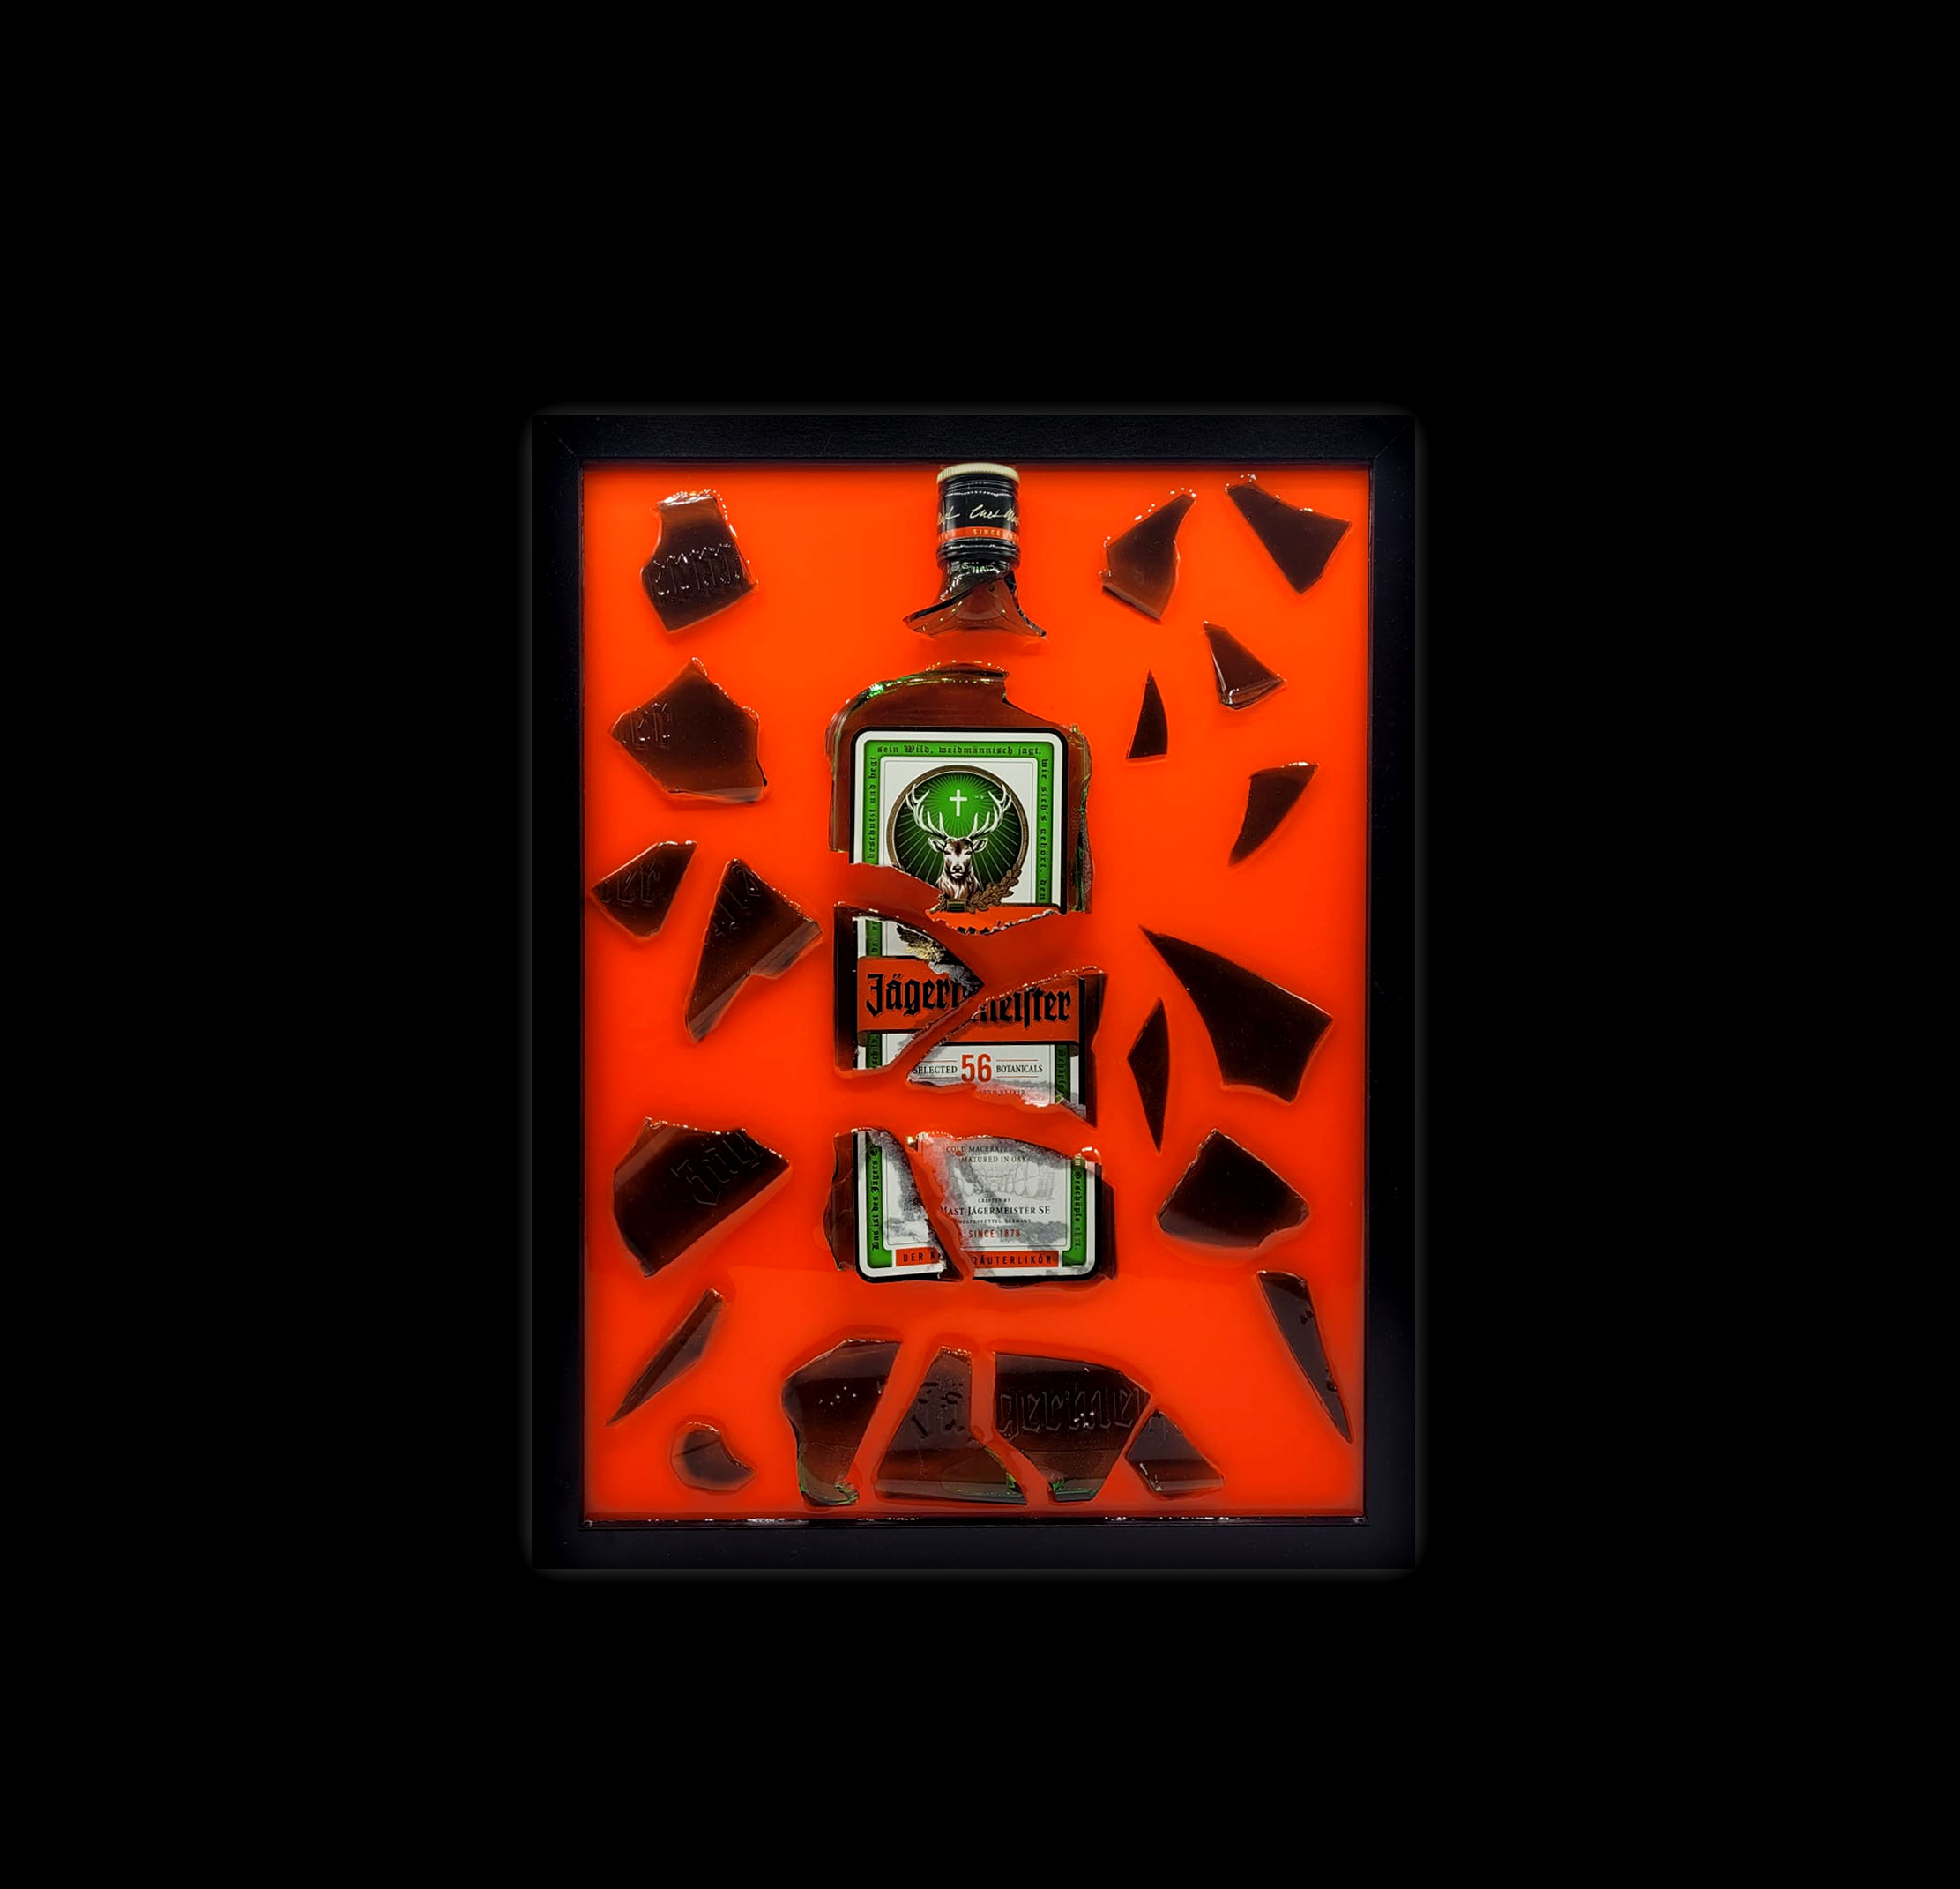 Handgefertigtes Wandbild aus Jägermeister Flasche - limited Edition - Unikat / verschiedene Designs - Fan Artikel Scherbenbild 32cm x 42cm 